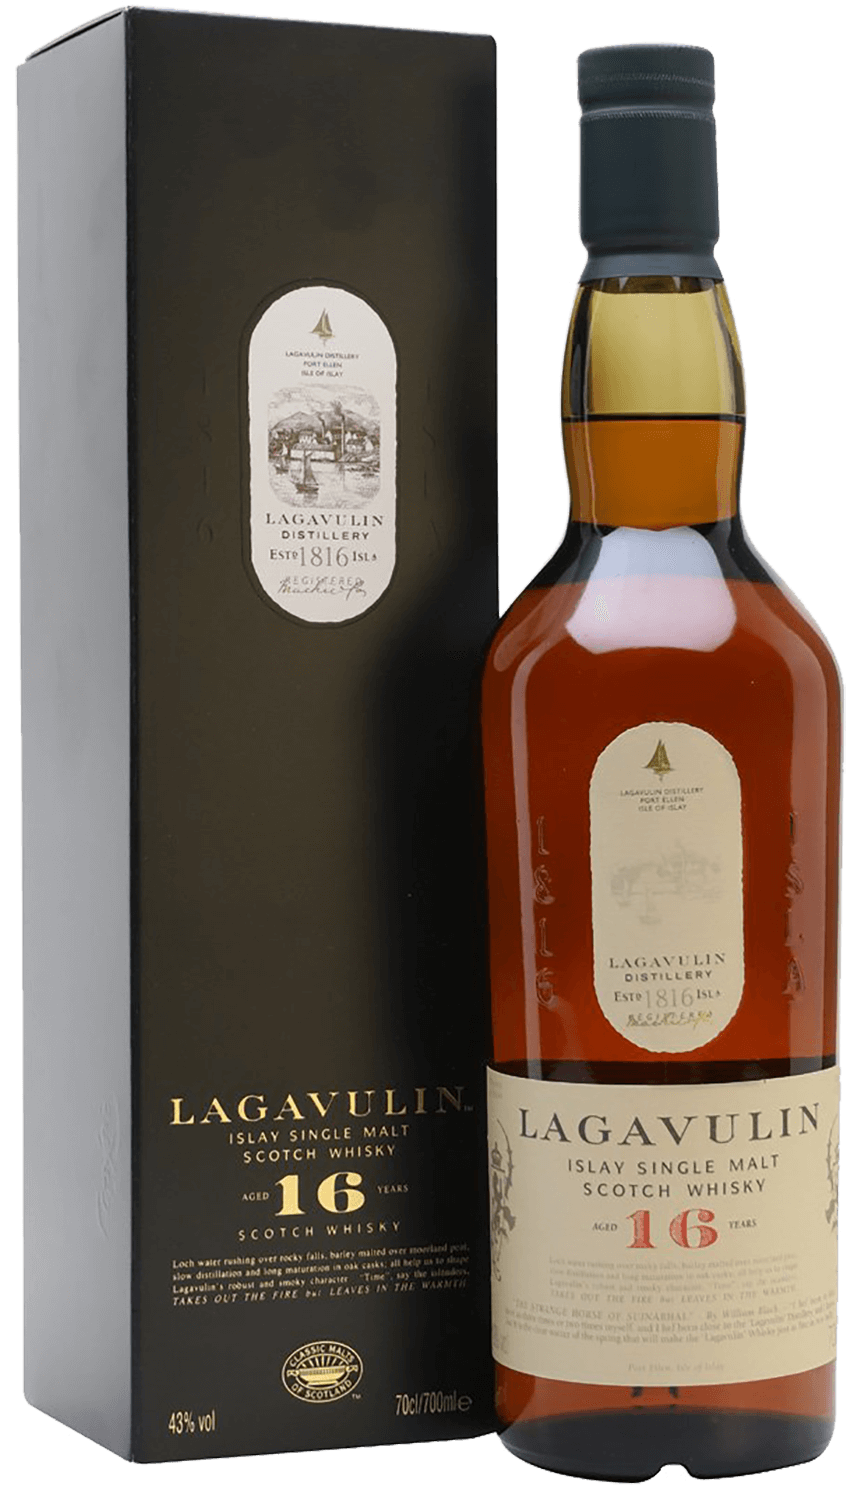 Lagavulin Islay single malt scotch whisky 16 Years Old (gift box) talisker 18 years old single malt scotch whisky gift box